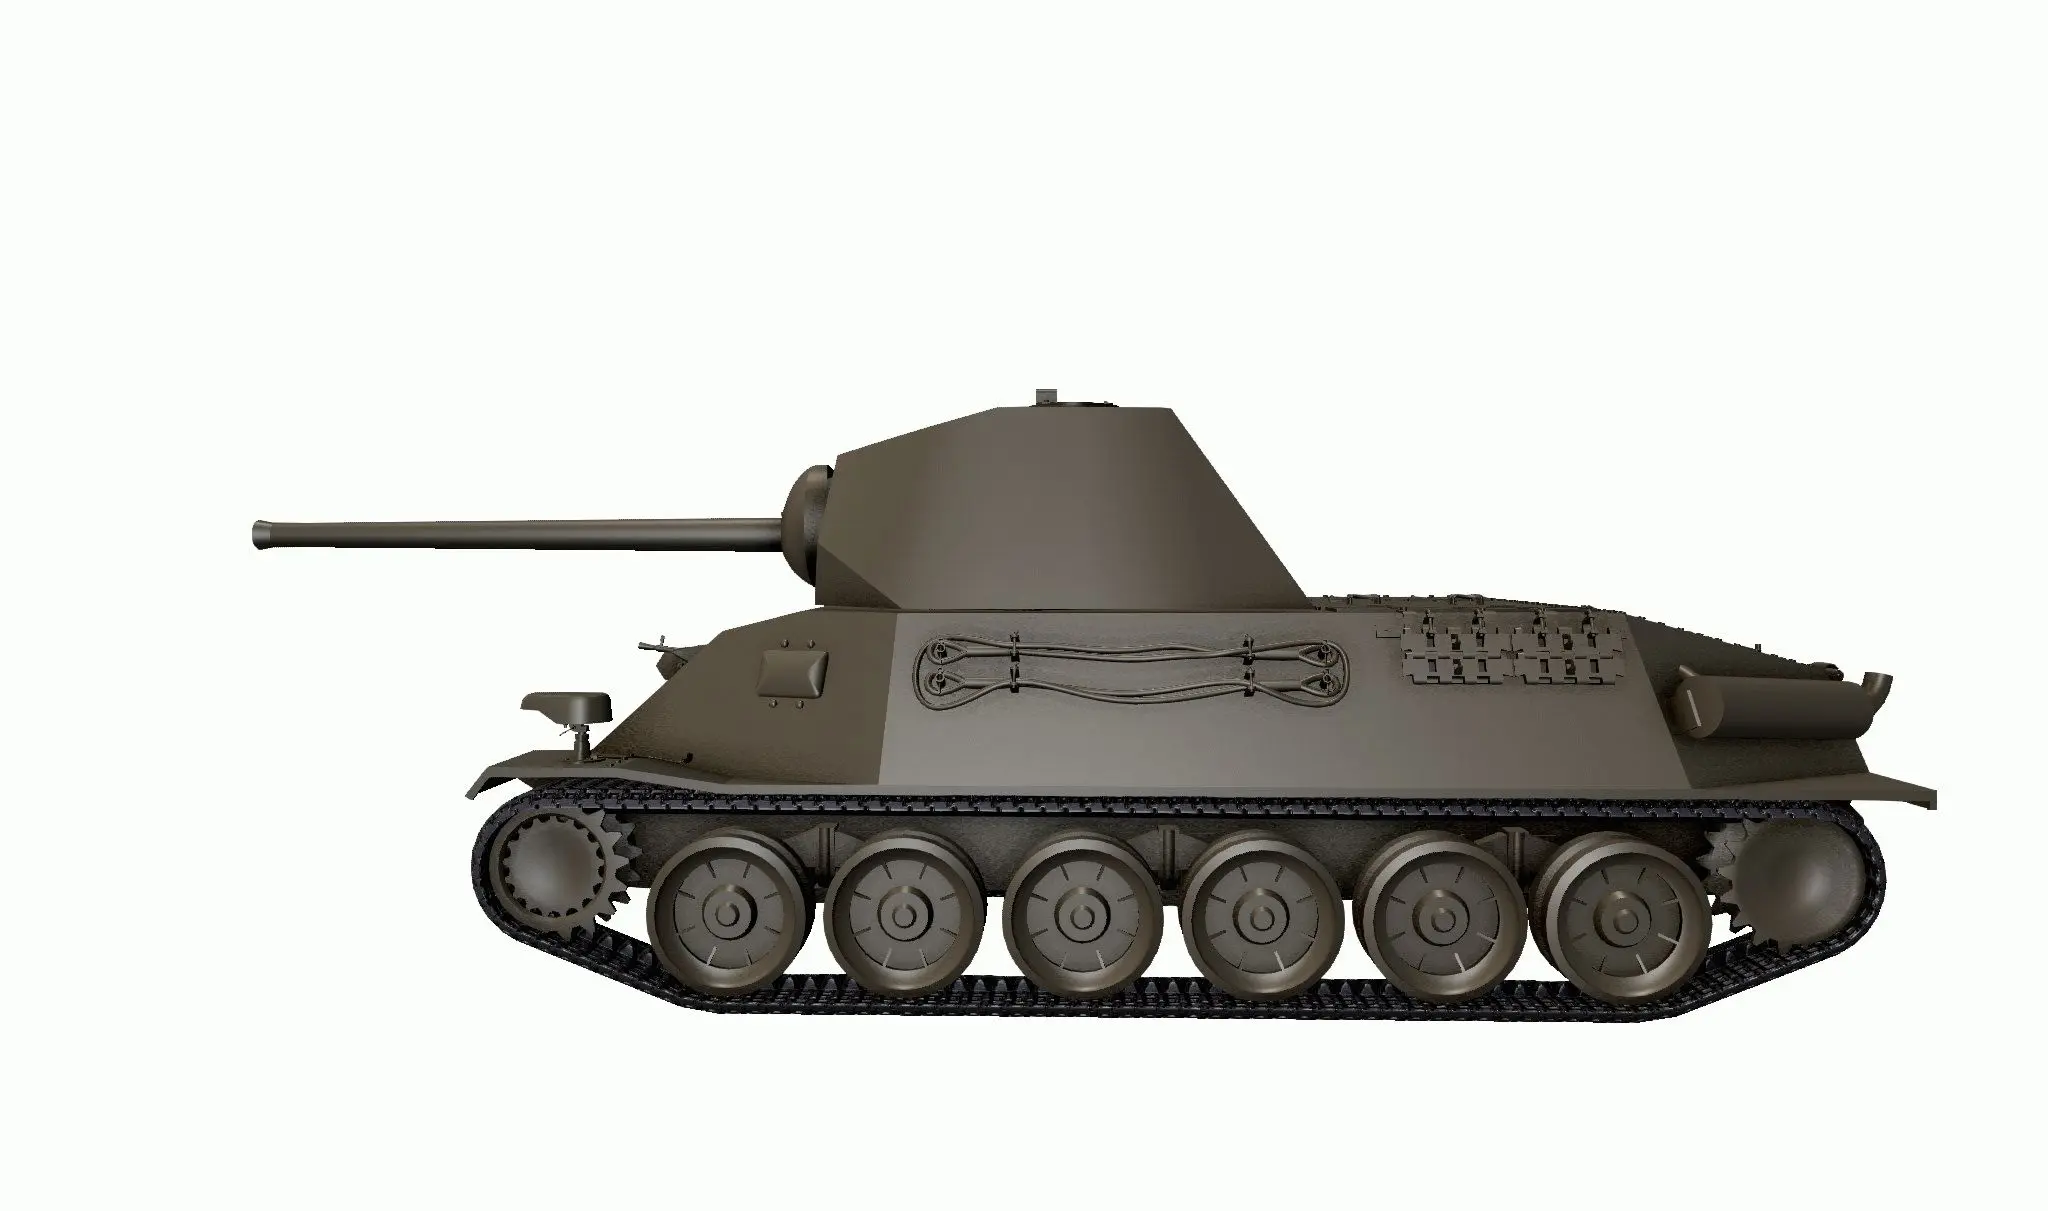 25 вид. Танк Skoda t25. Шкода т 25. Чешский танк Шкода т 25. Чехословацкий танк т 25 Шкода.